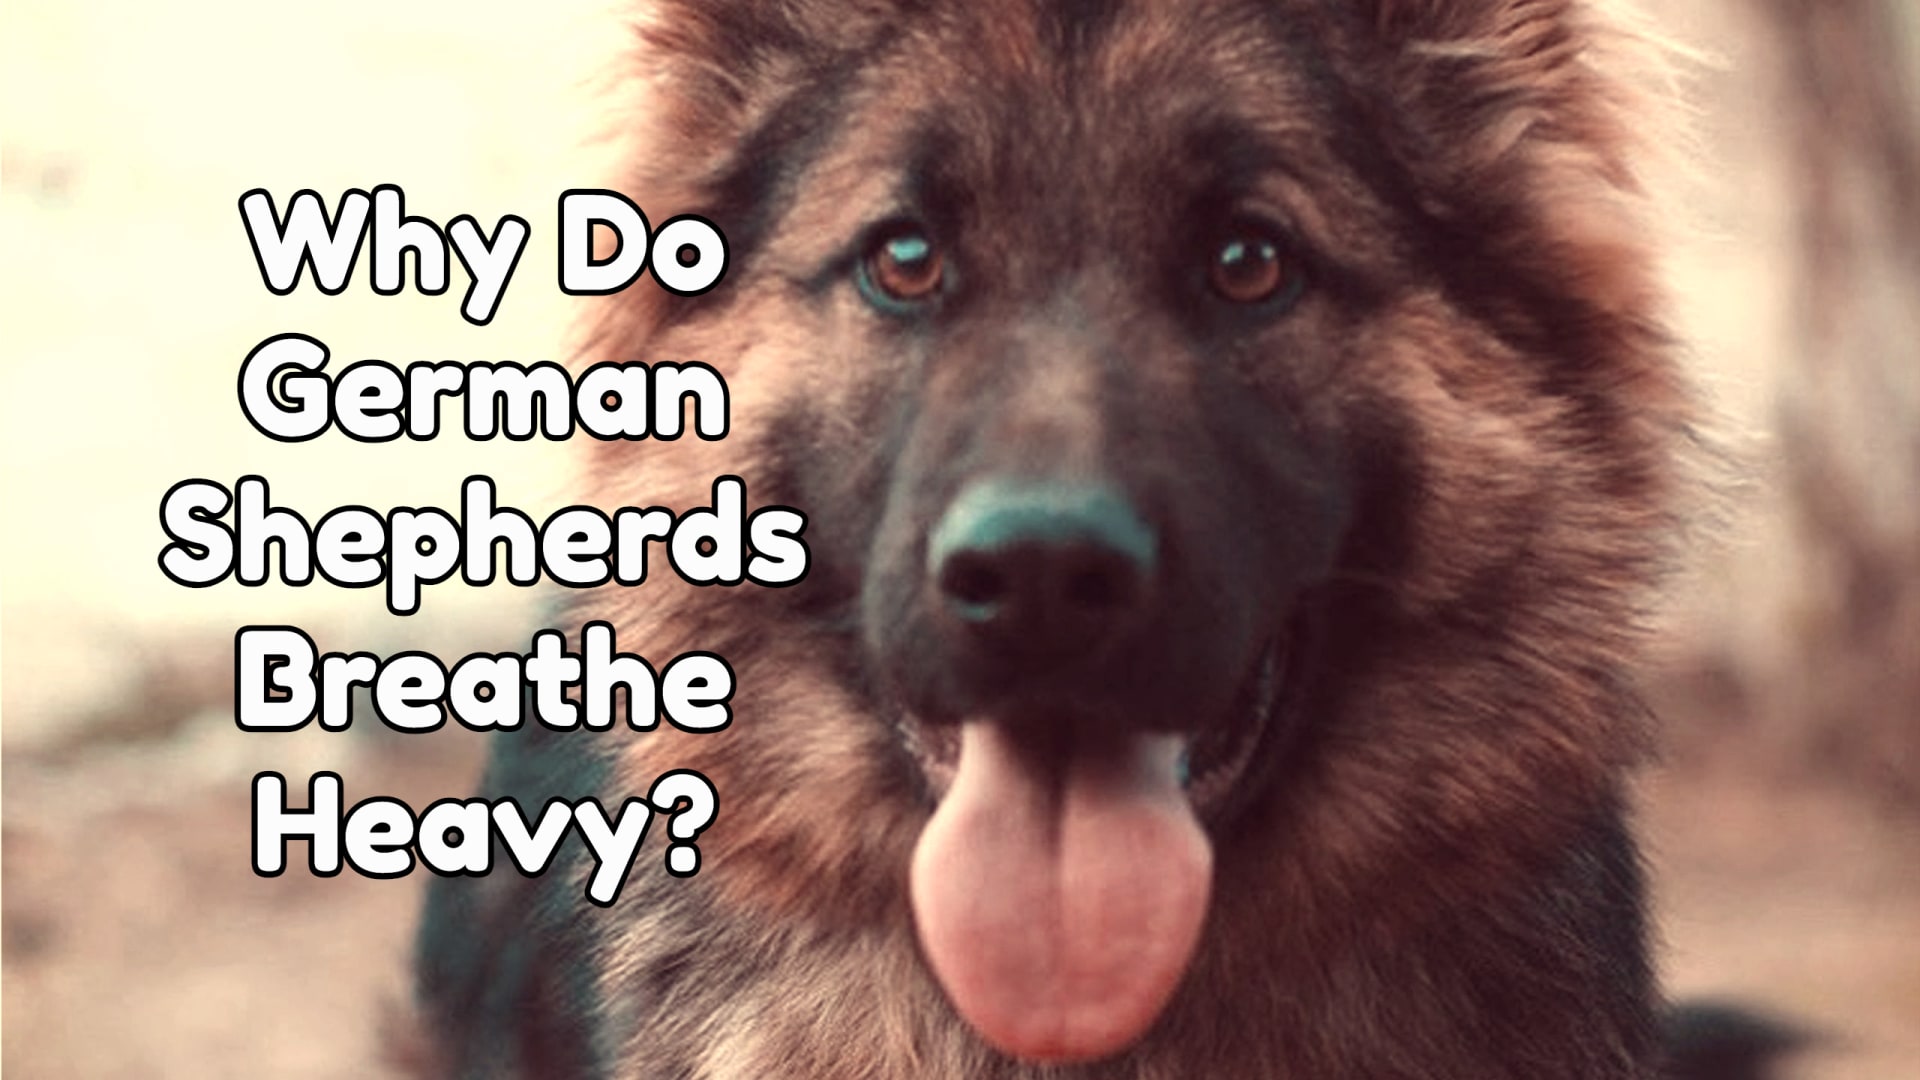 Why Do German Shepherds Breathe Heavy?